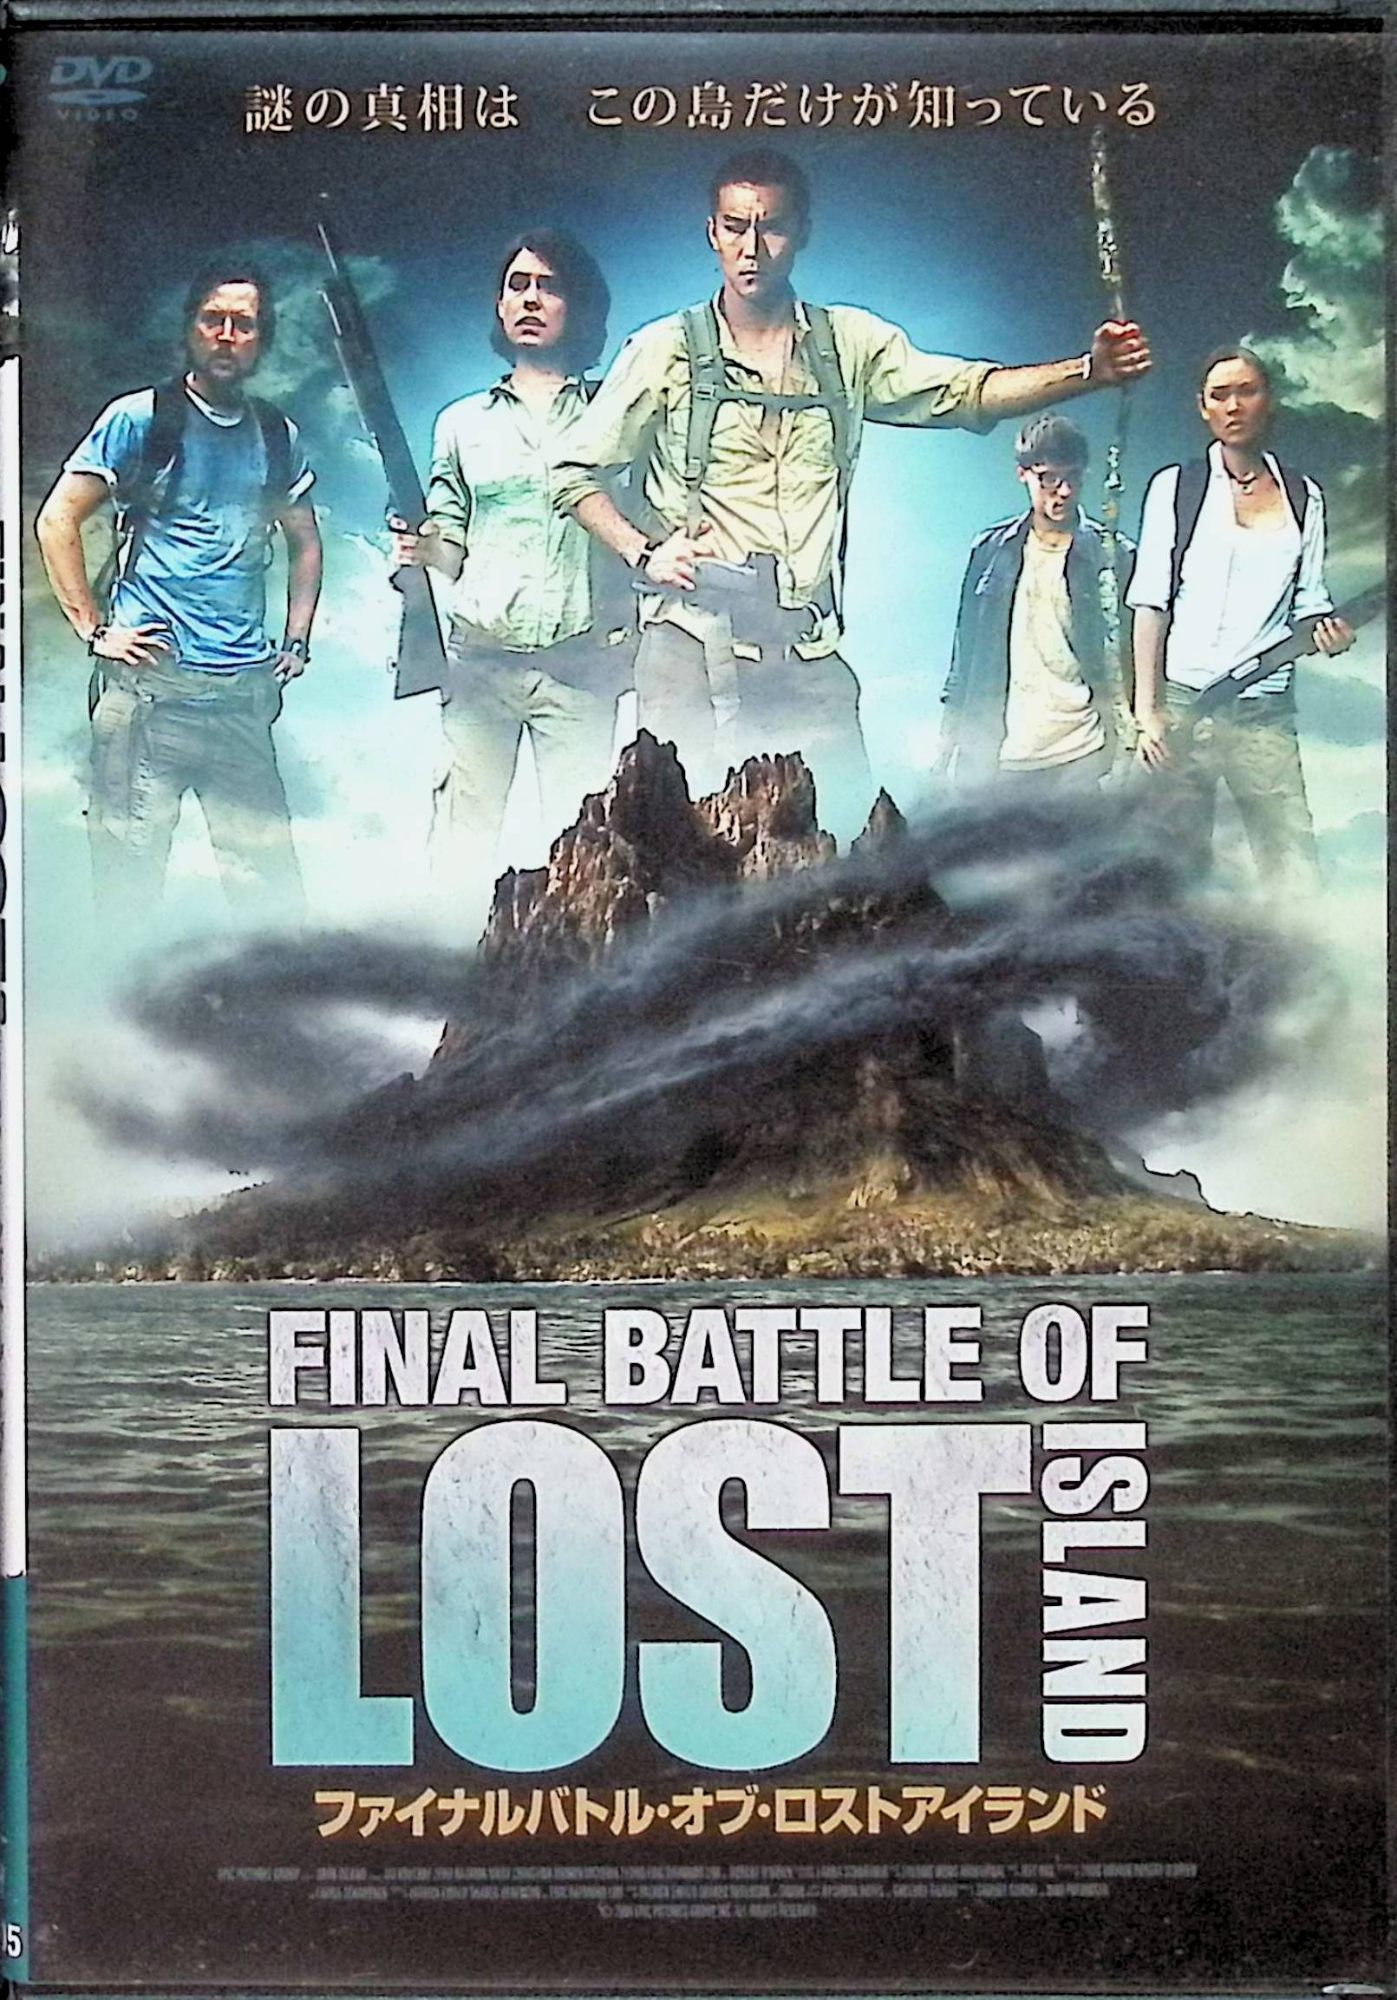  final Battle *ob*ro store i Land [DVD]